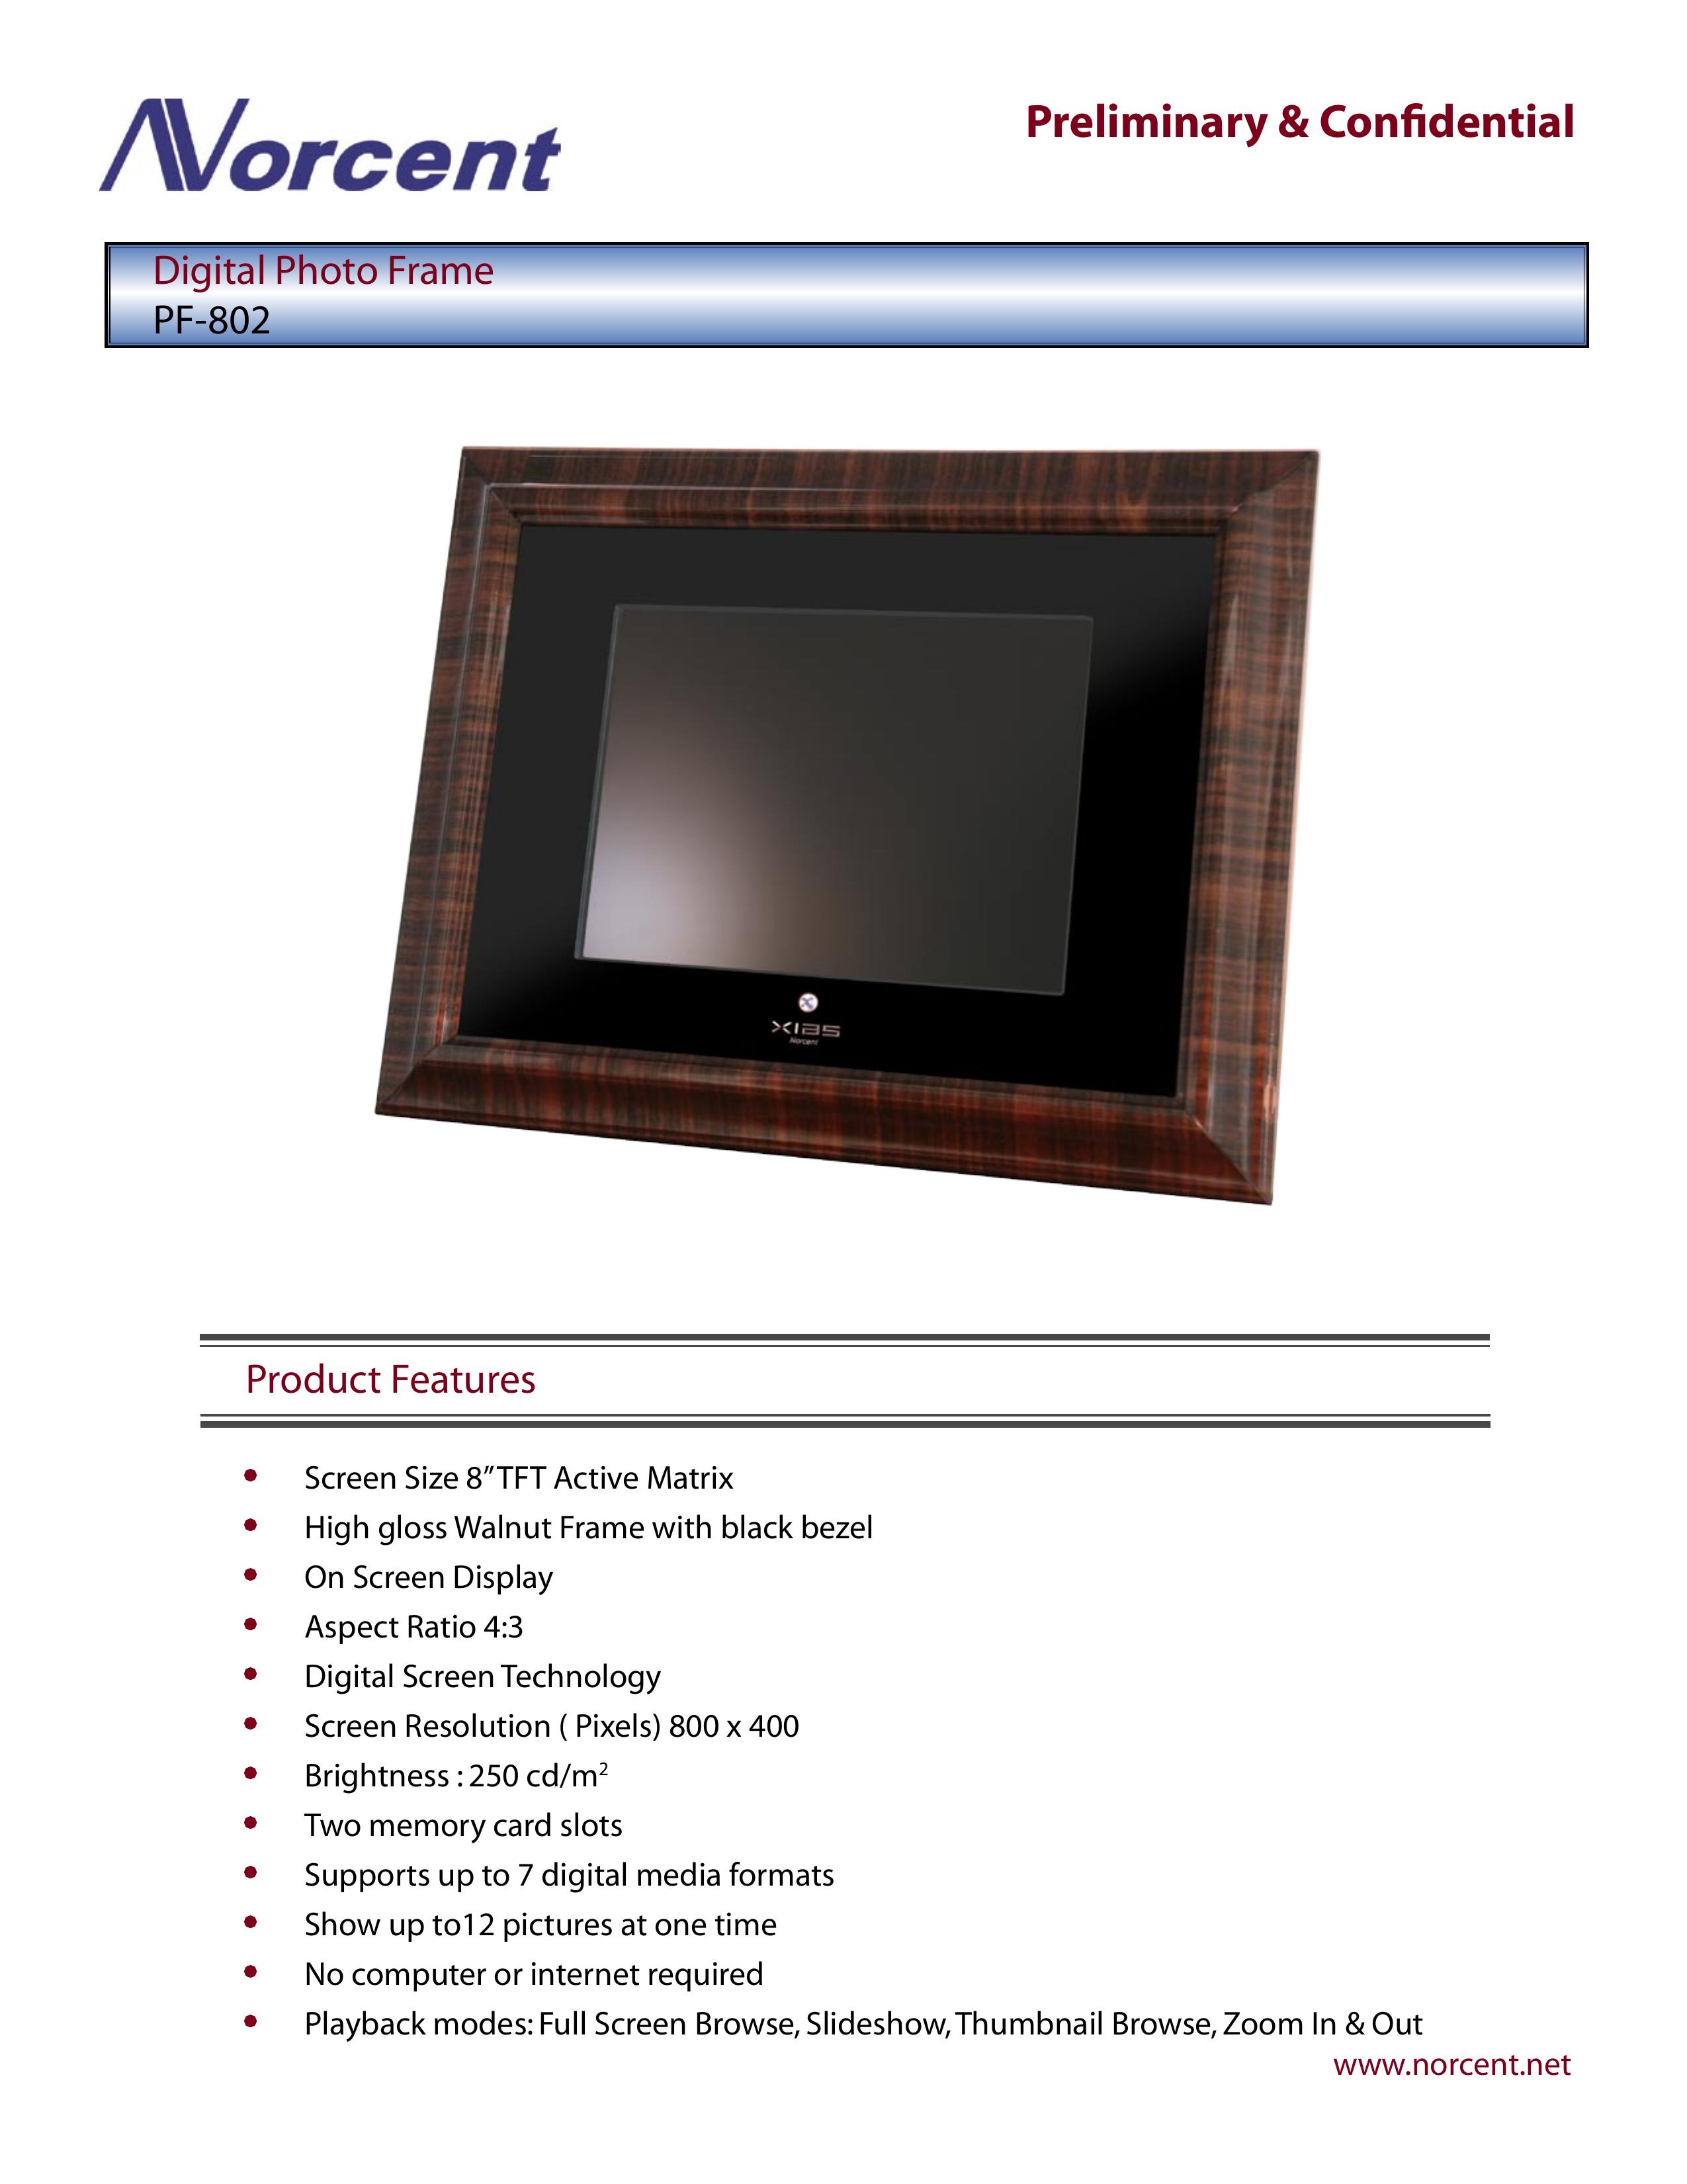 Norcent Technologies PF-802 Digital Photo Frame User Manual